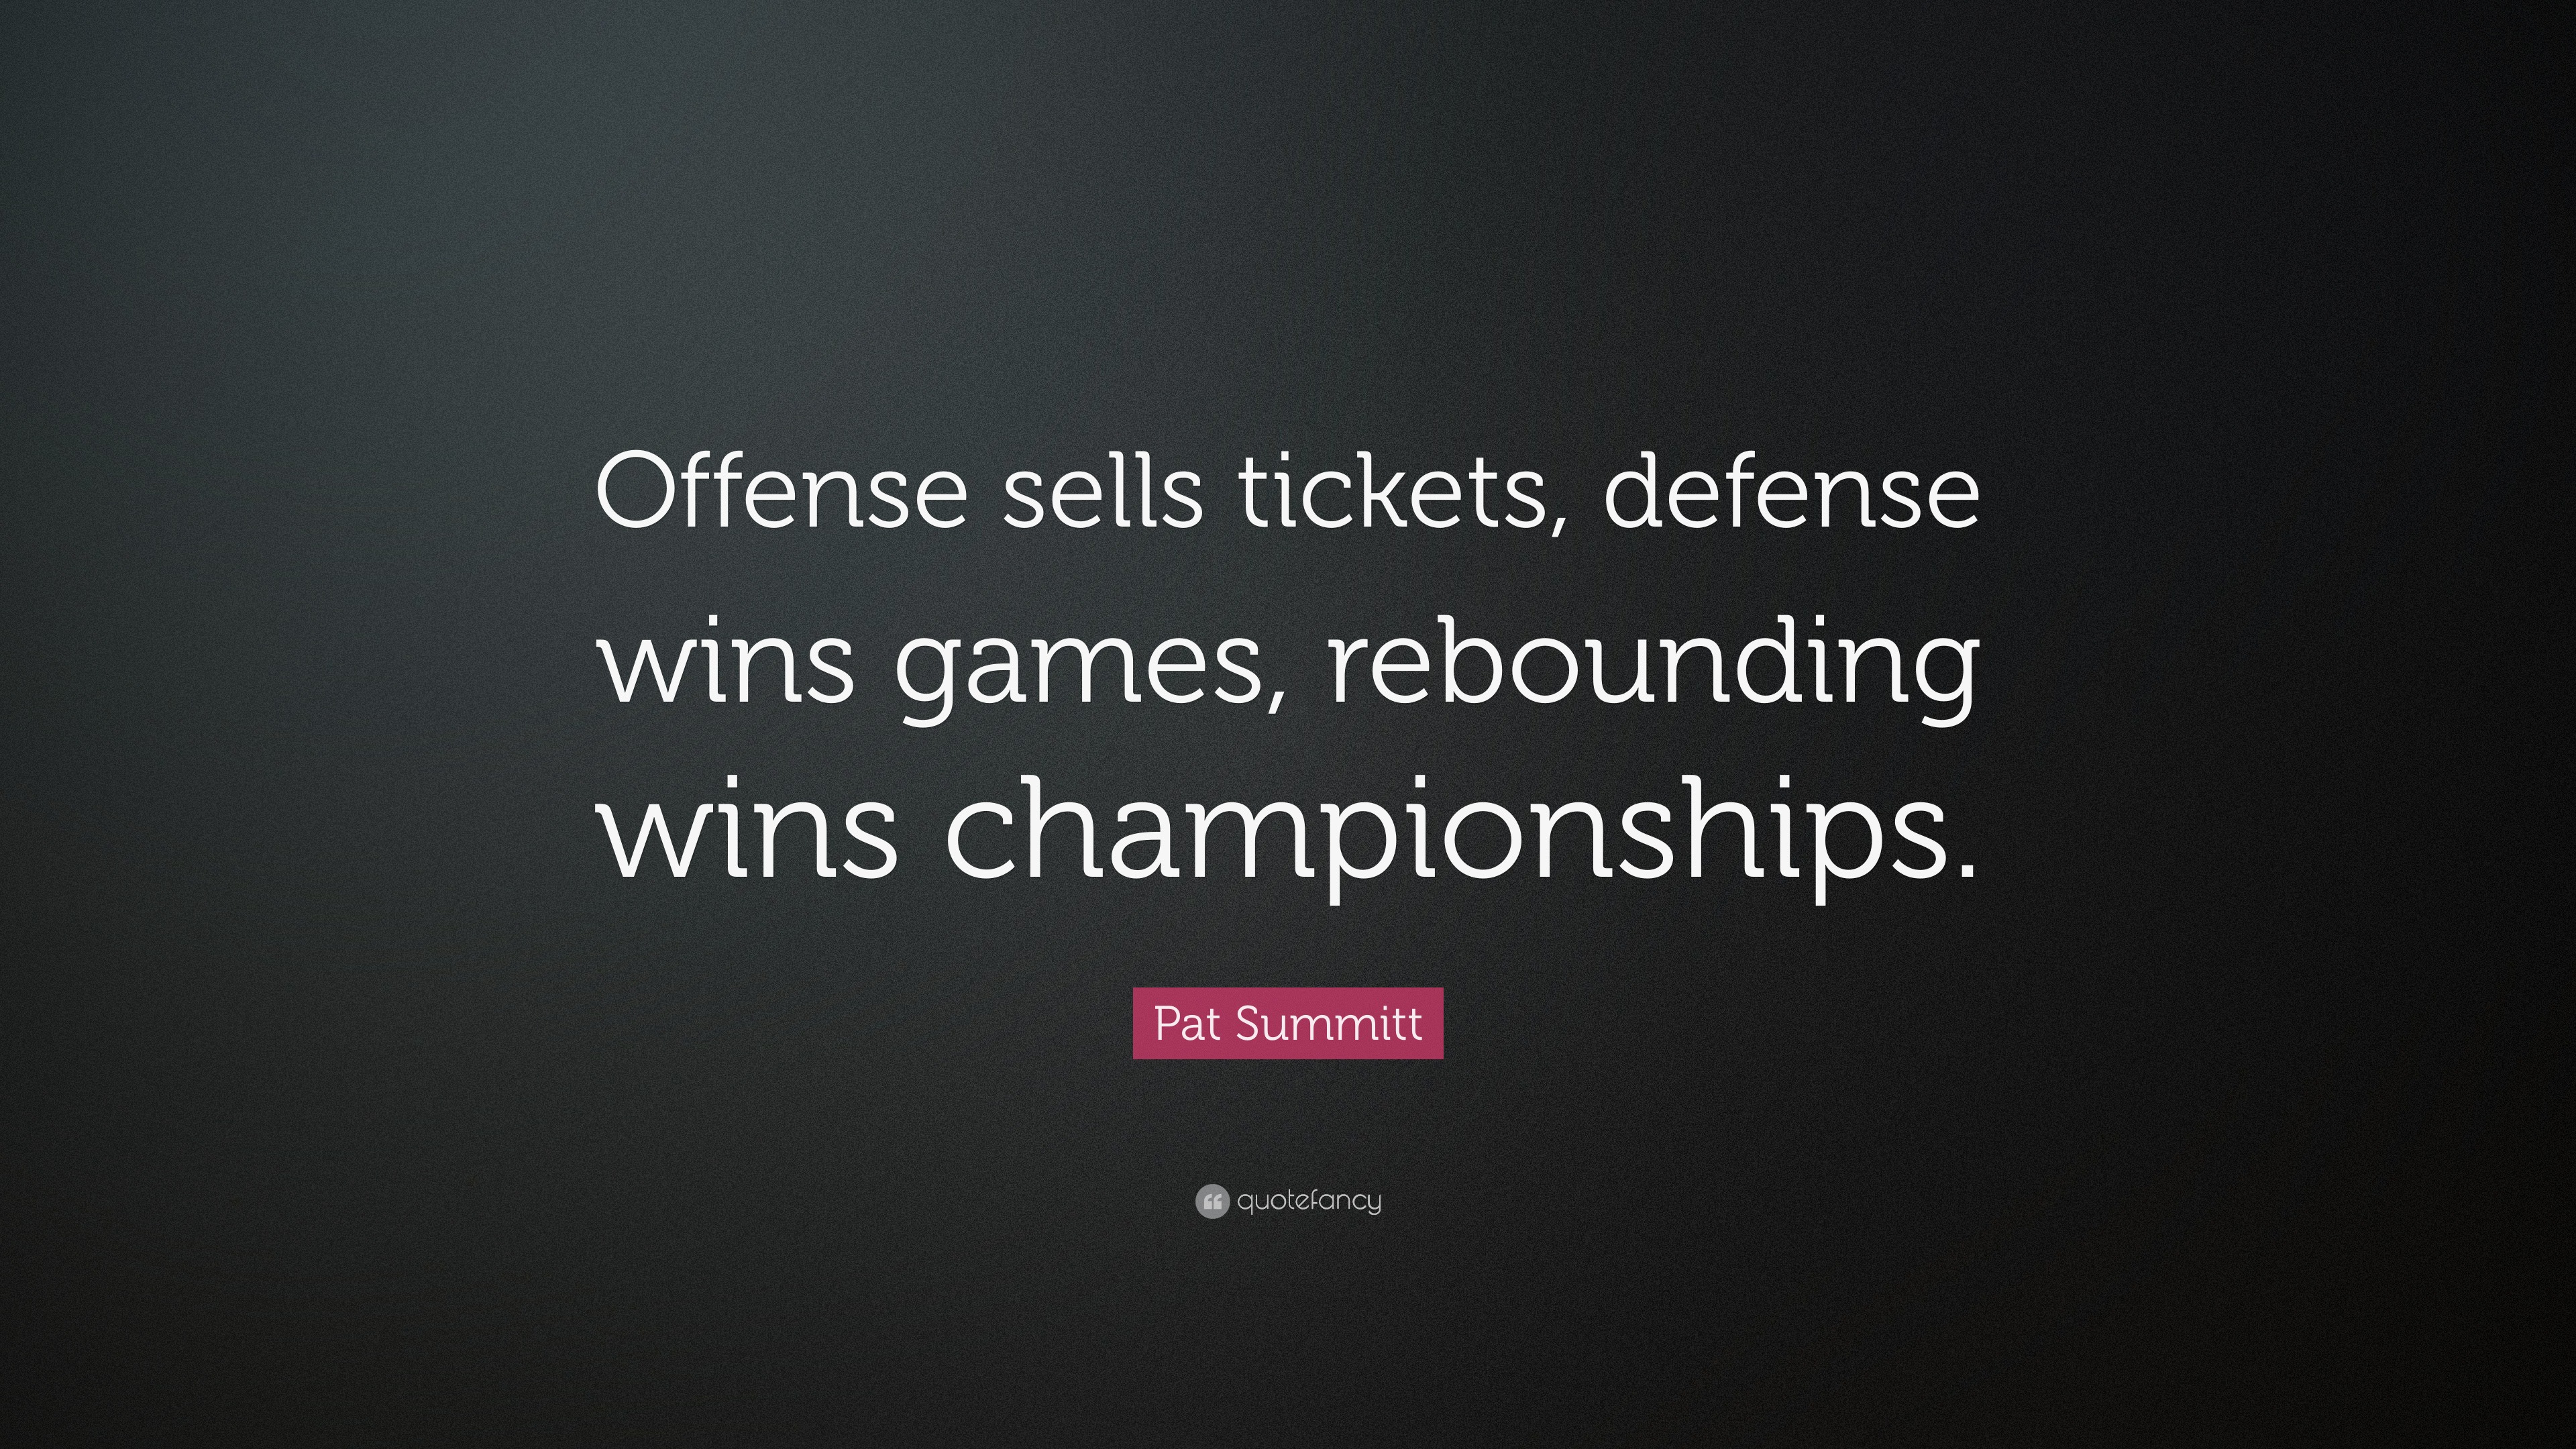 Pat Summitt Quote: “Offense sells tickets, defense wins games